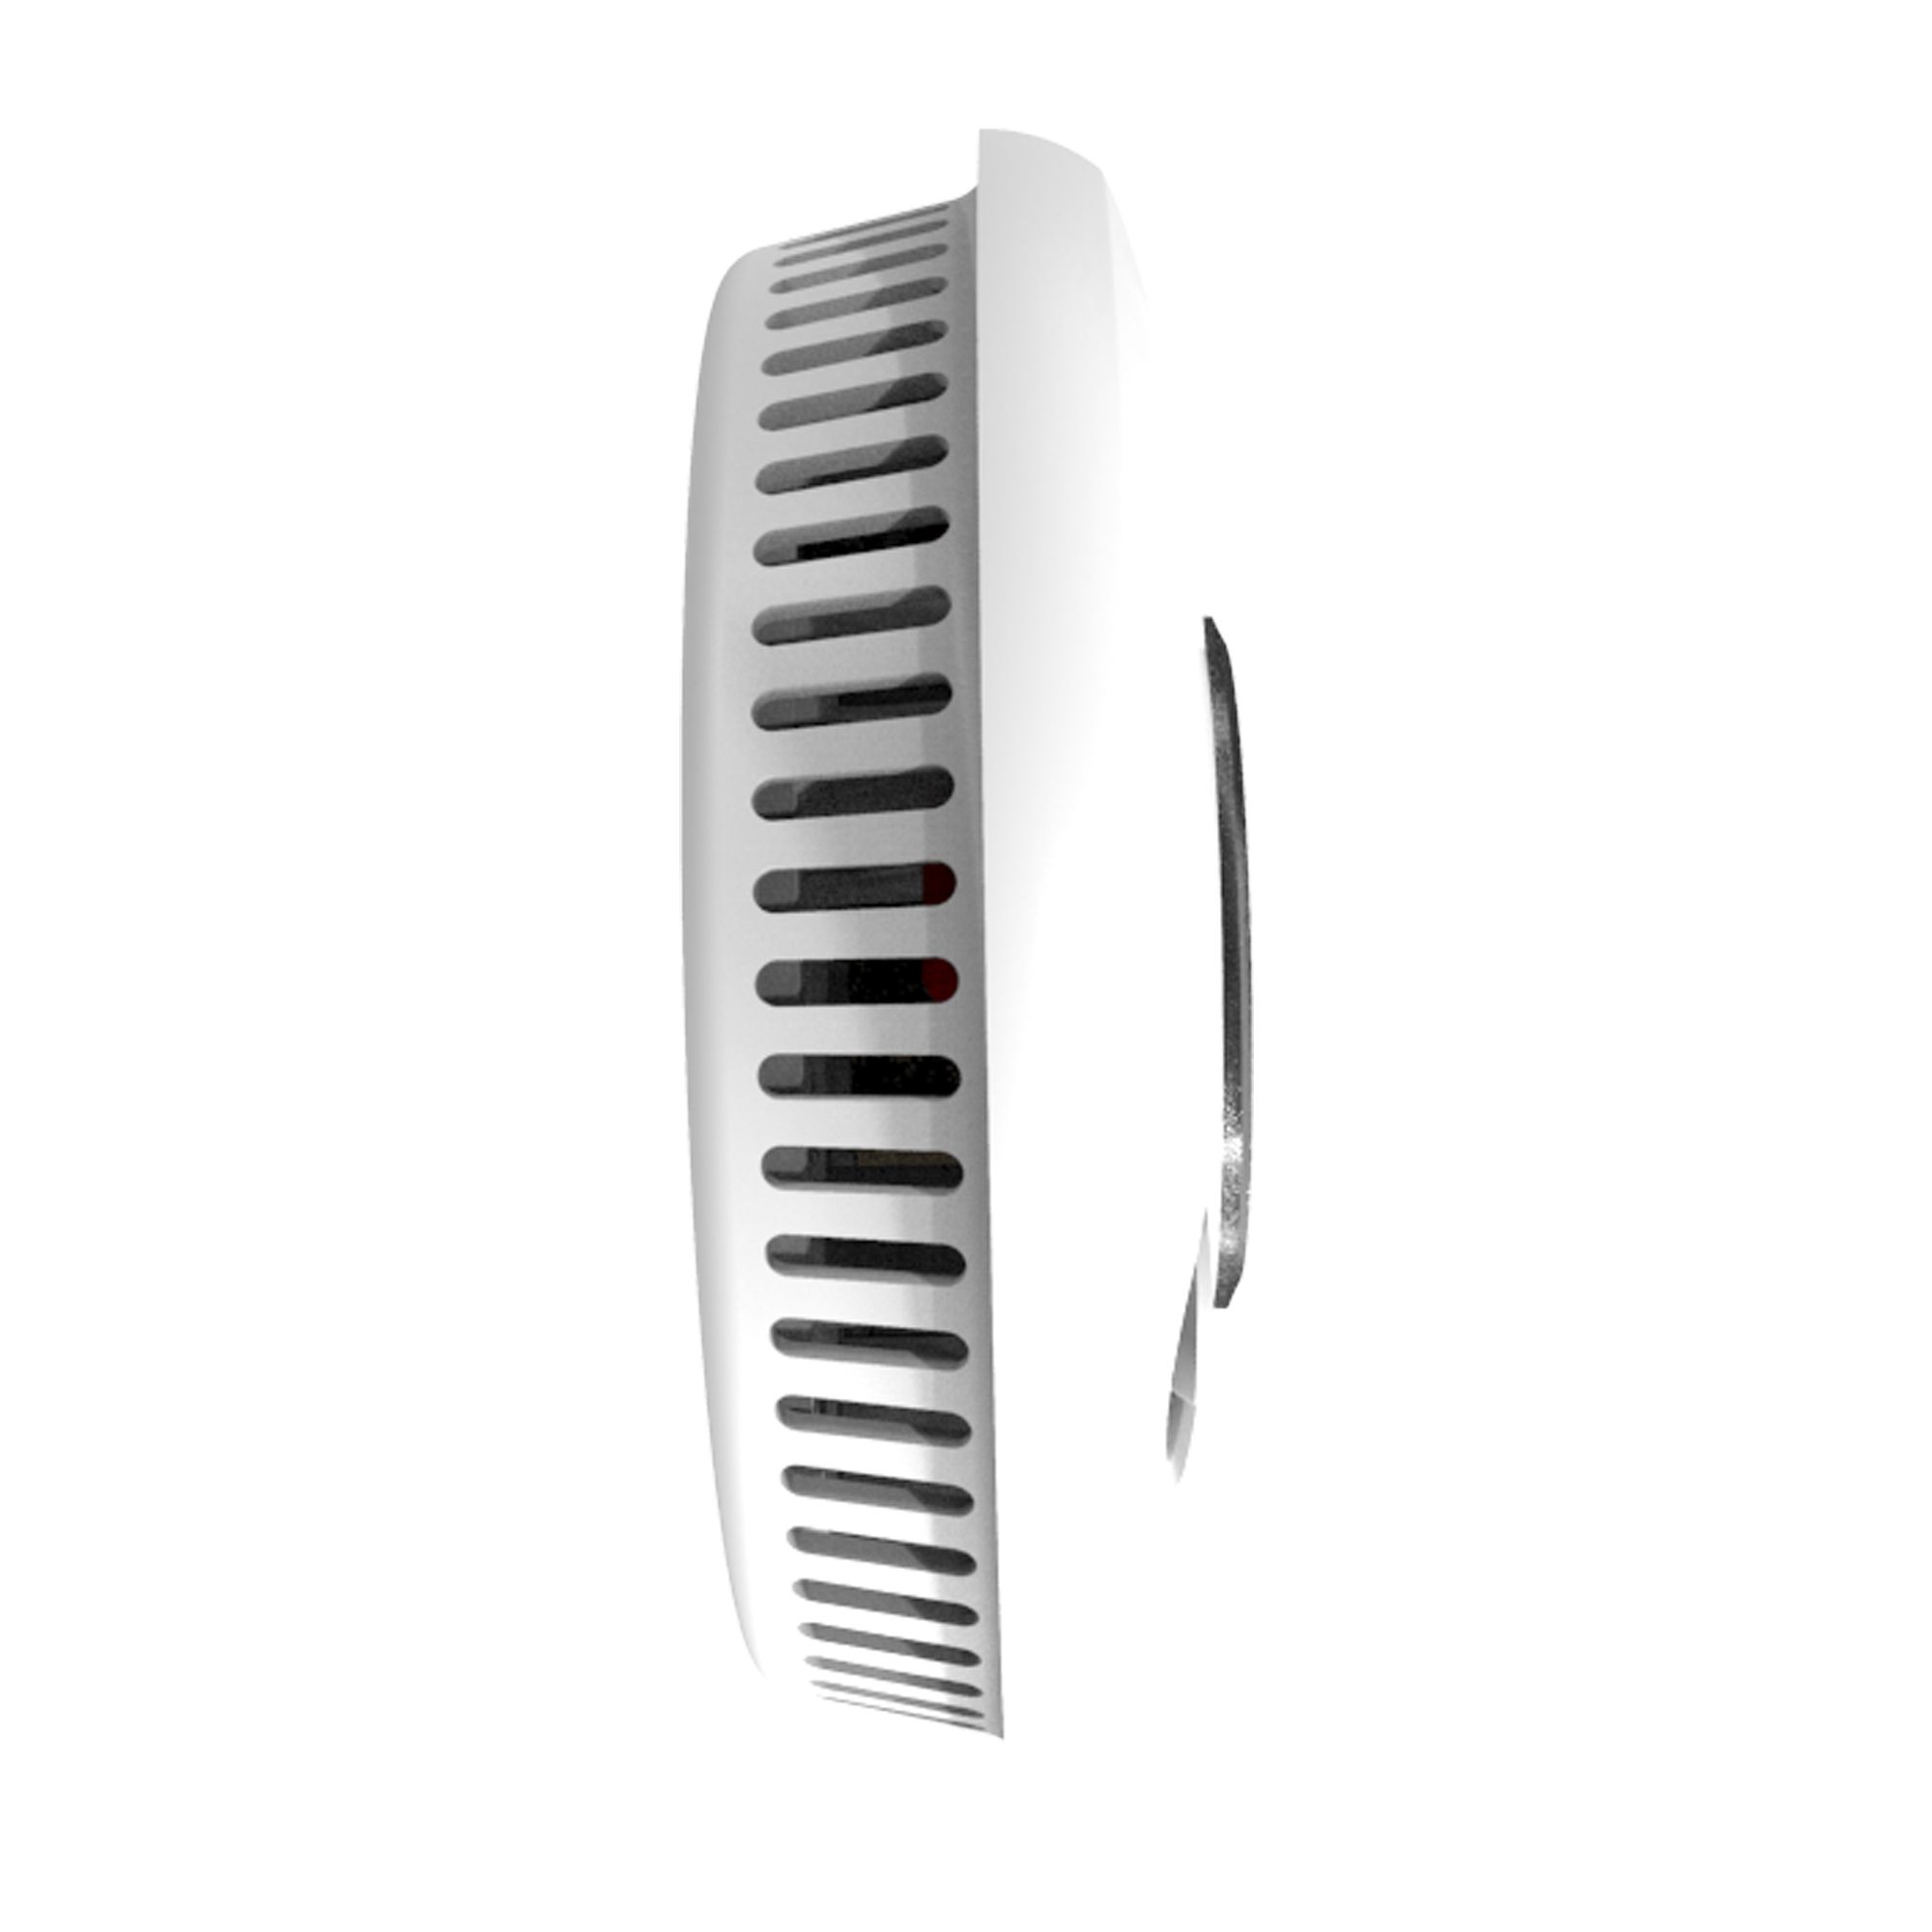 FireAngel FA6720-R Thermistor Heat Alarm with 10-year lifetime